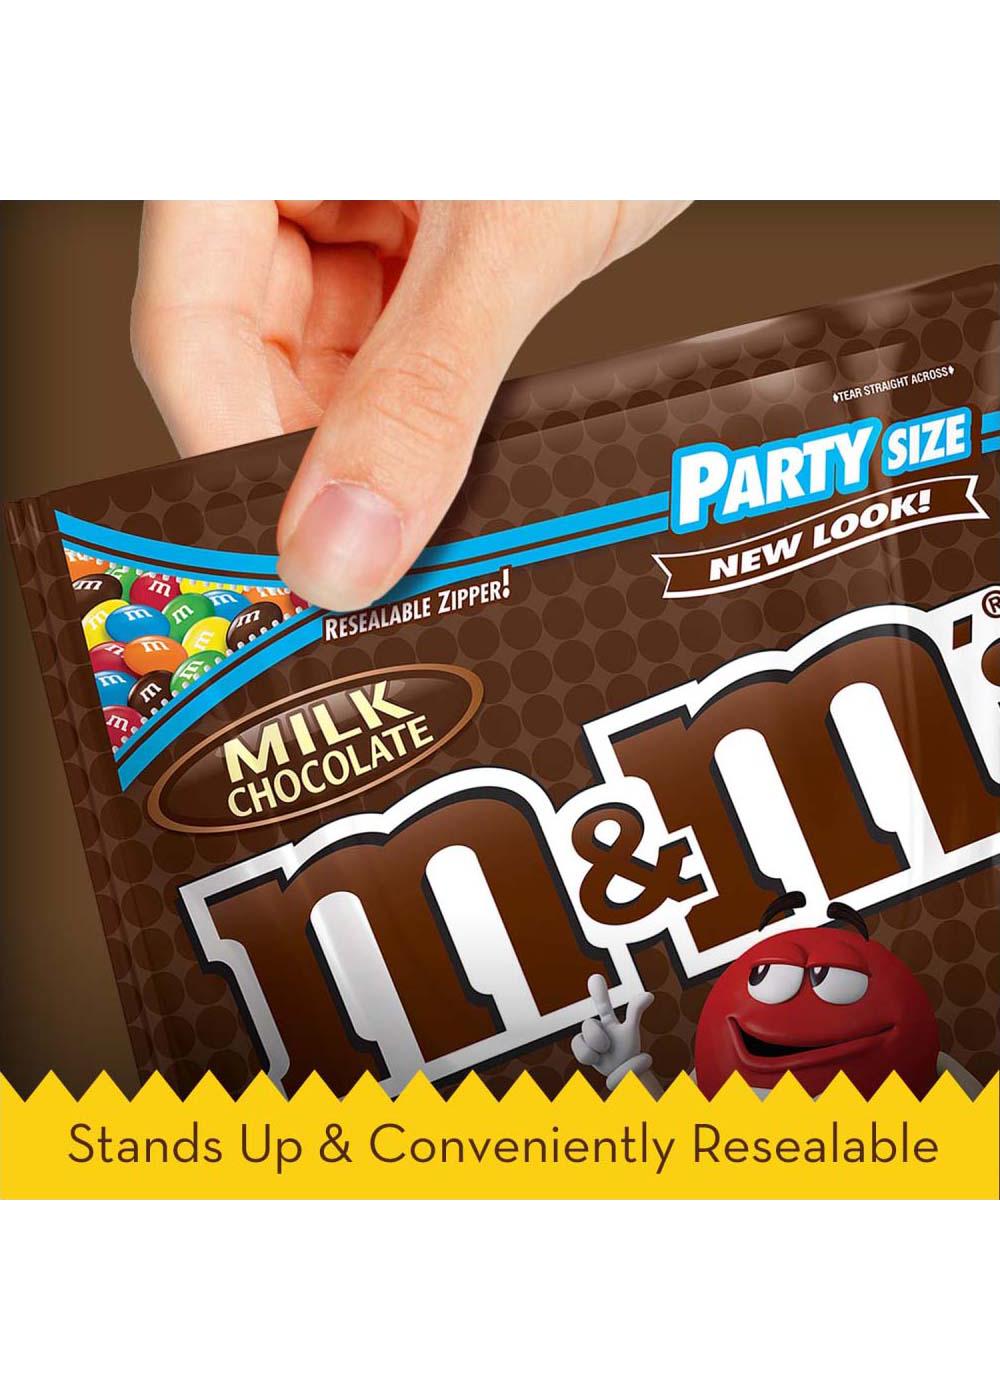 M&M'S, Milk Chocolate Candy Sharing Size Bag, 10.7 oz